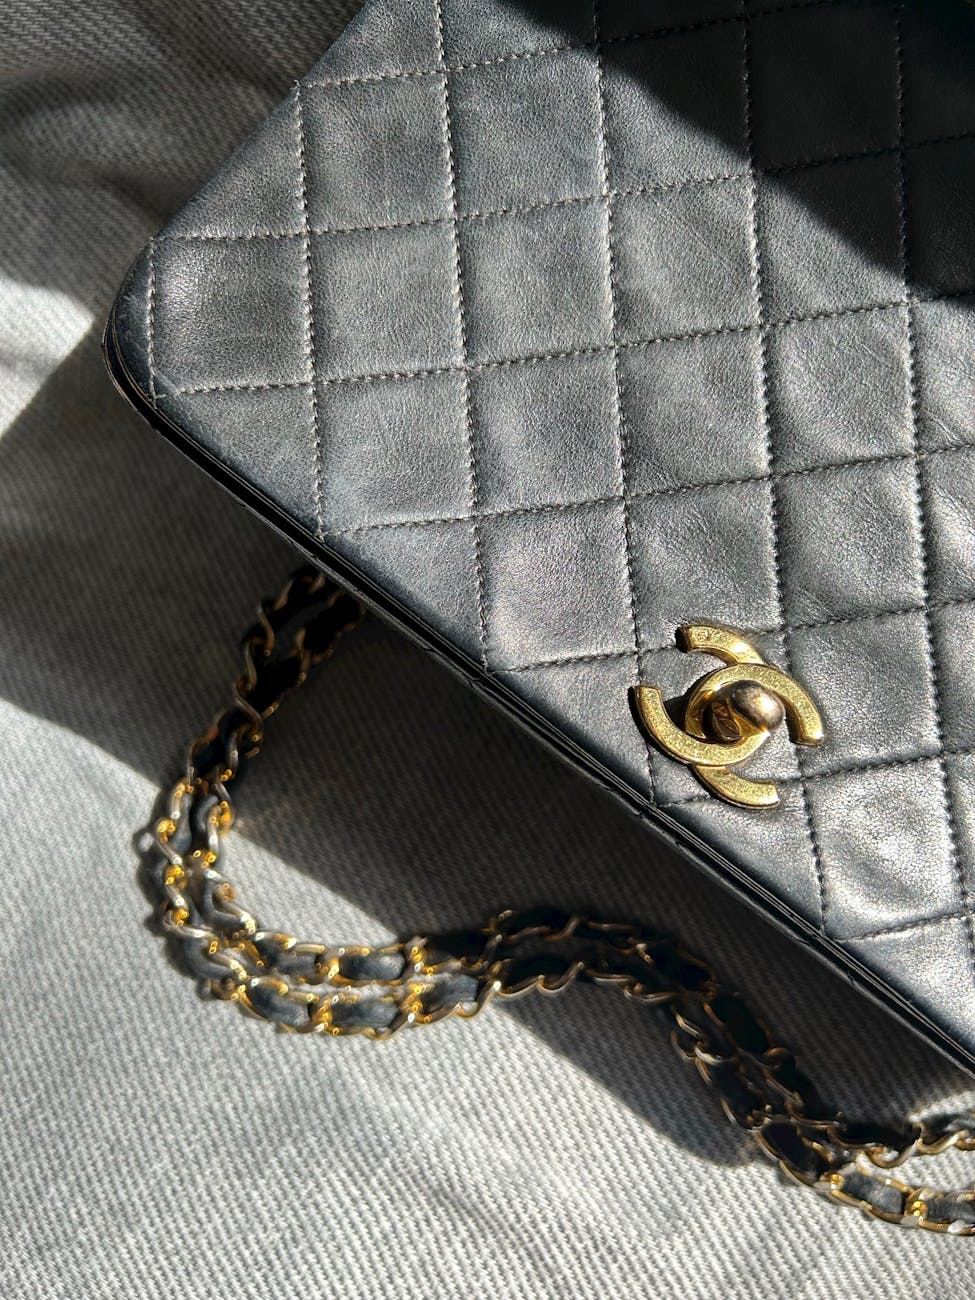 The Chanel Handbag Obsession